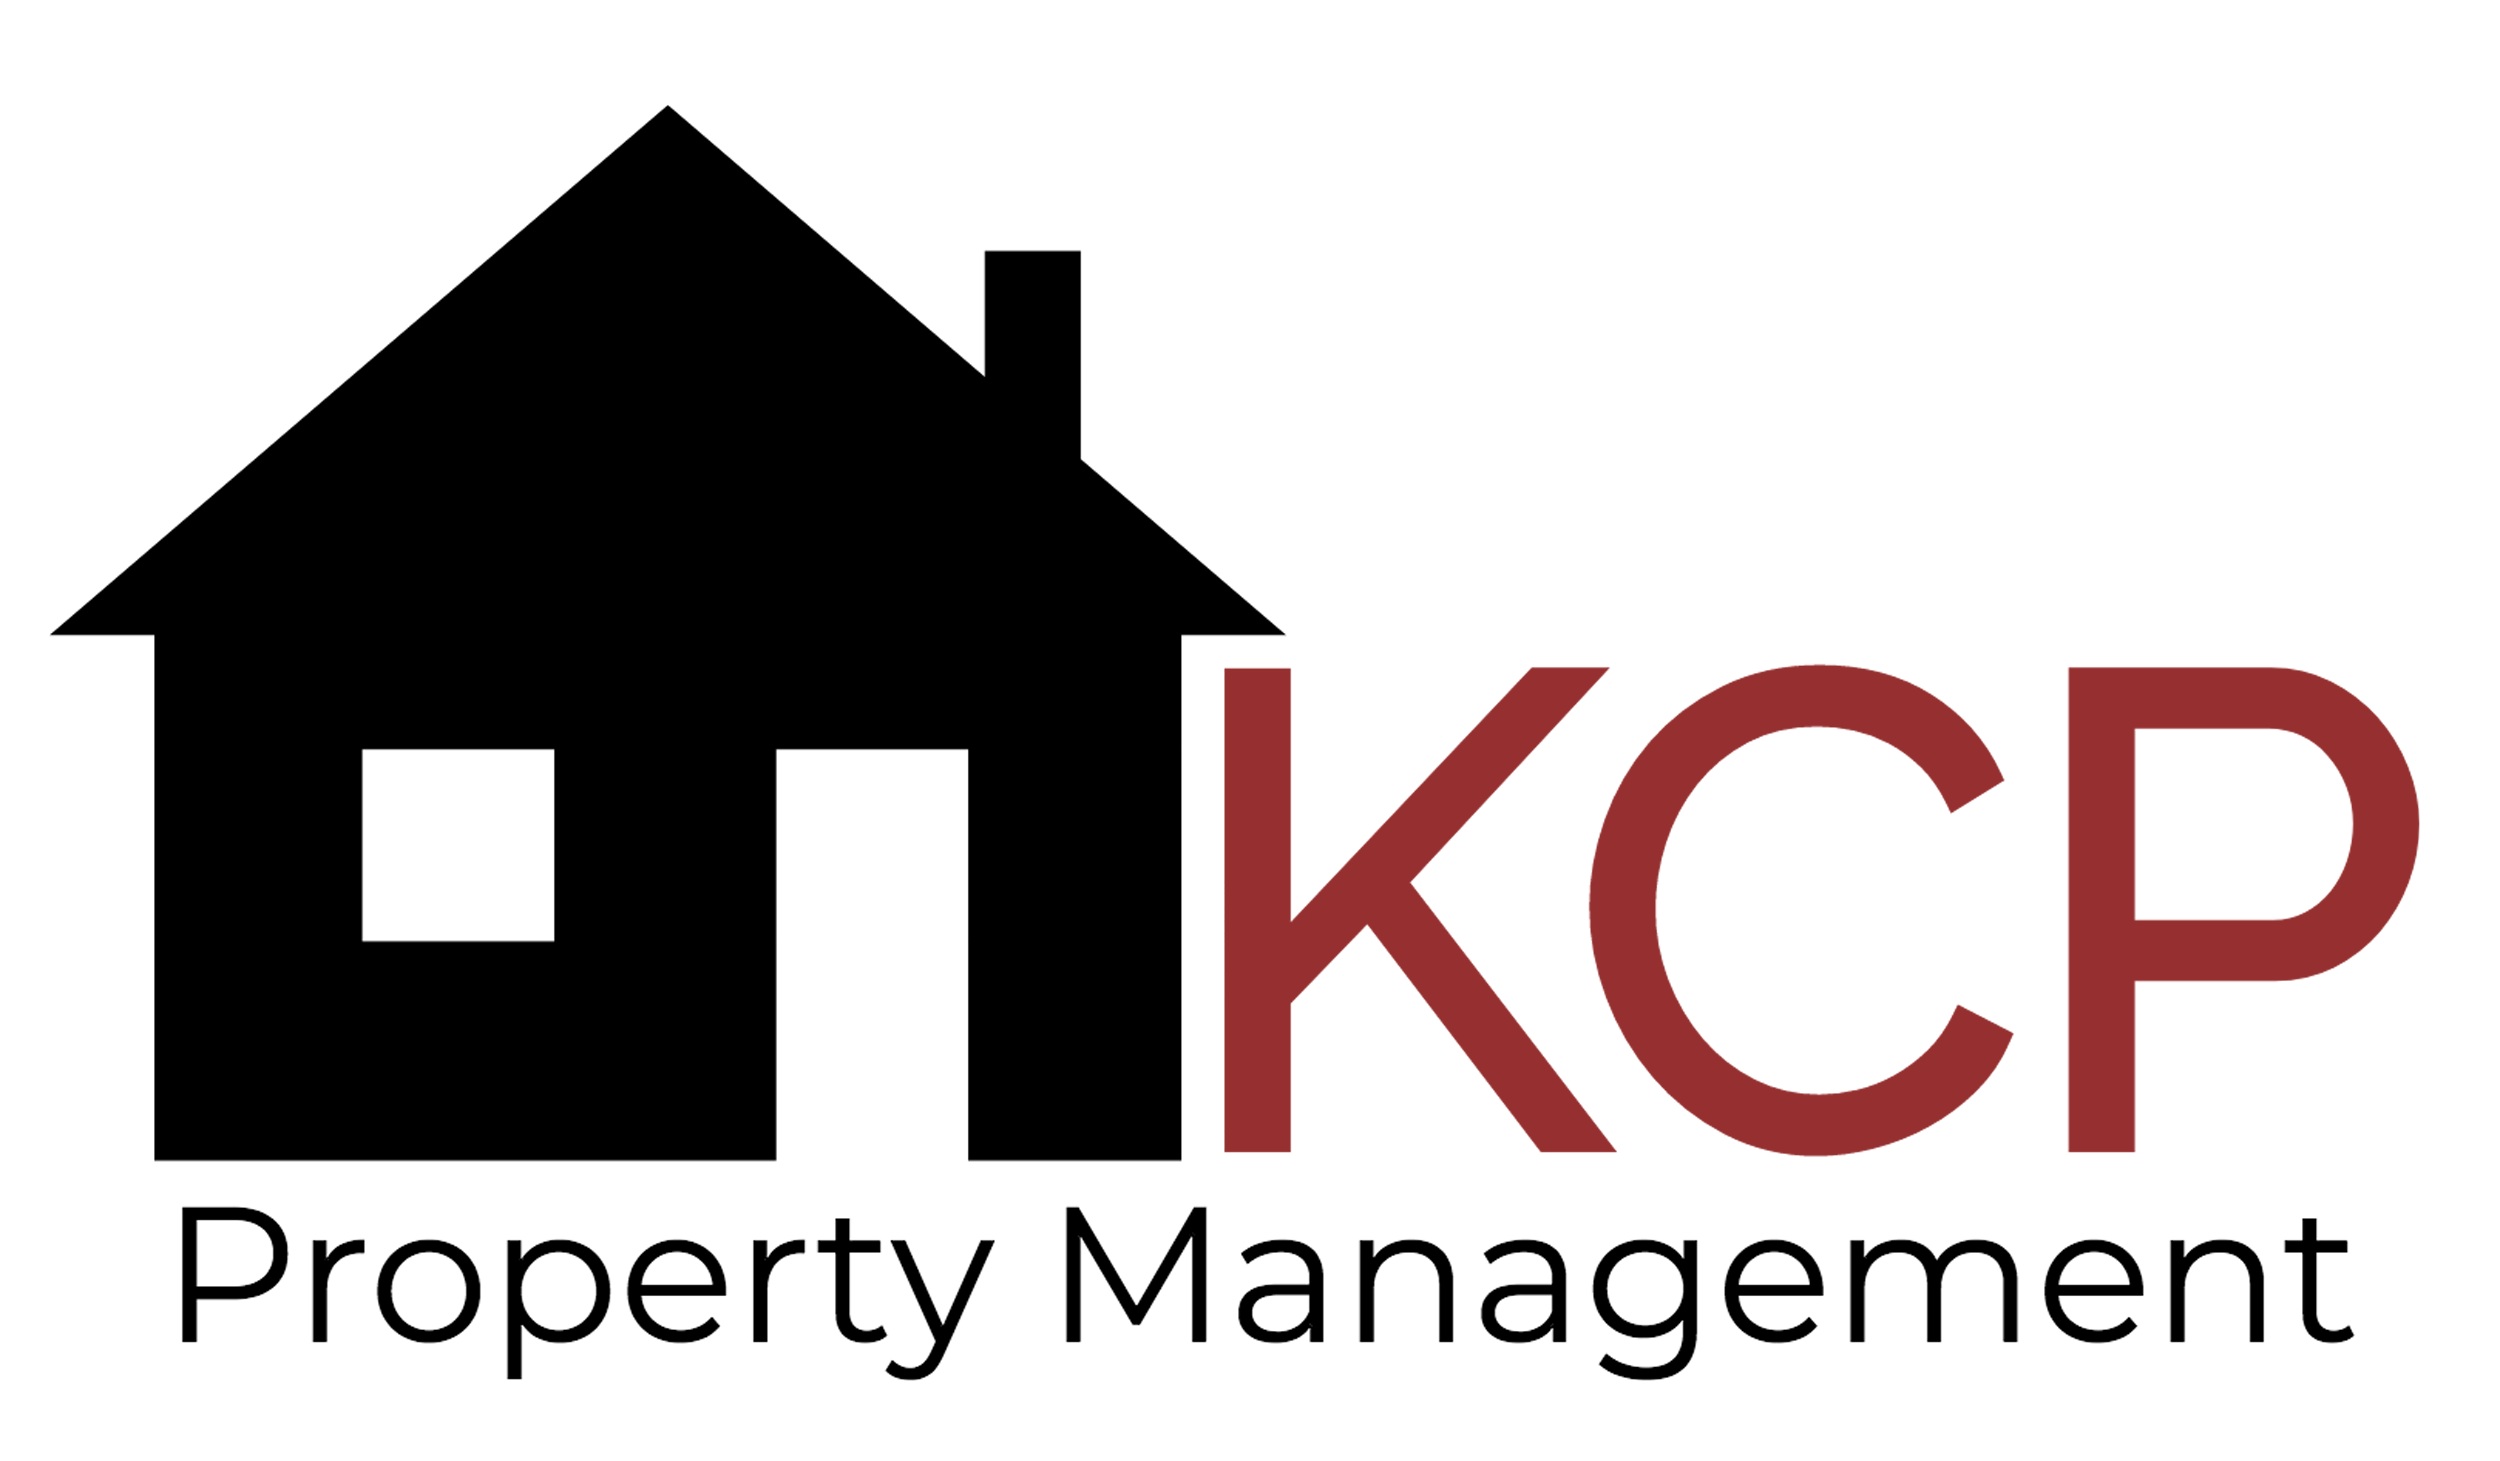 Property Management Companies Cleveland